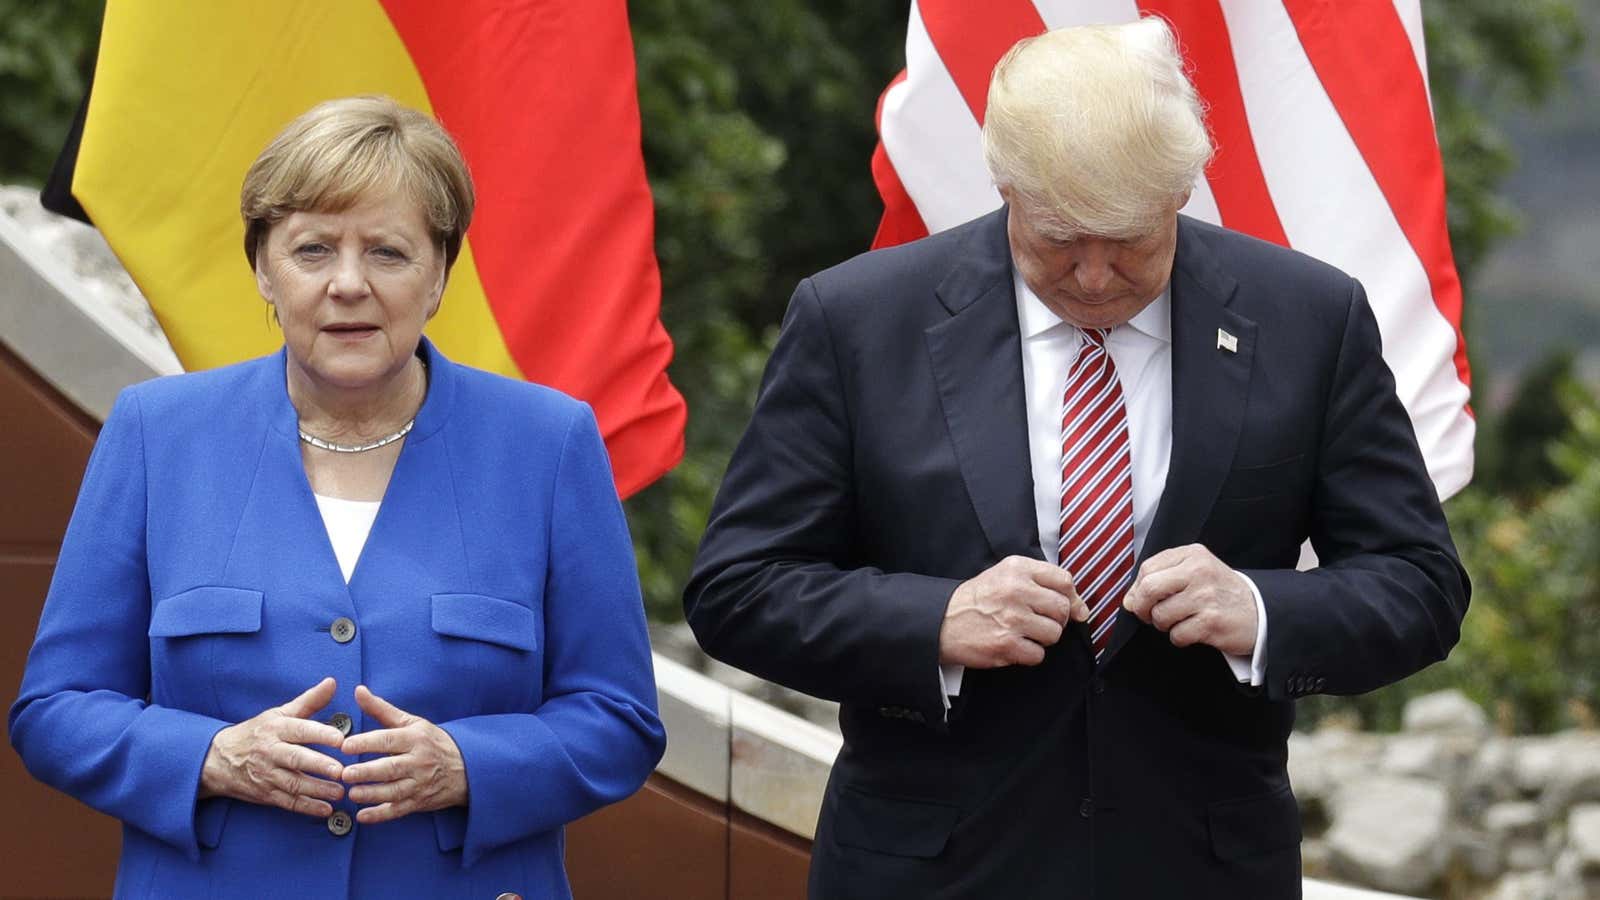 Merkel had a “very unsatisfactory” G7 with Trump.